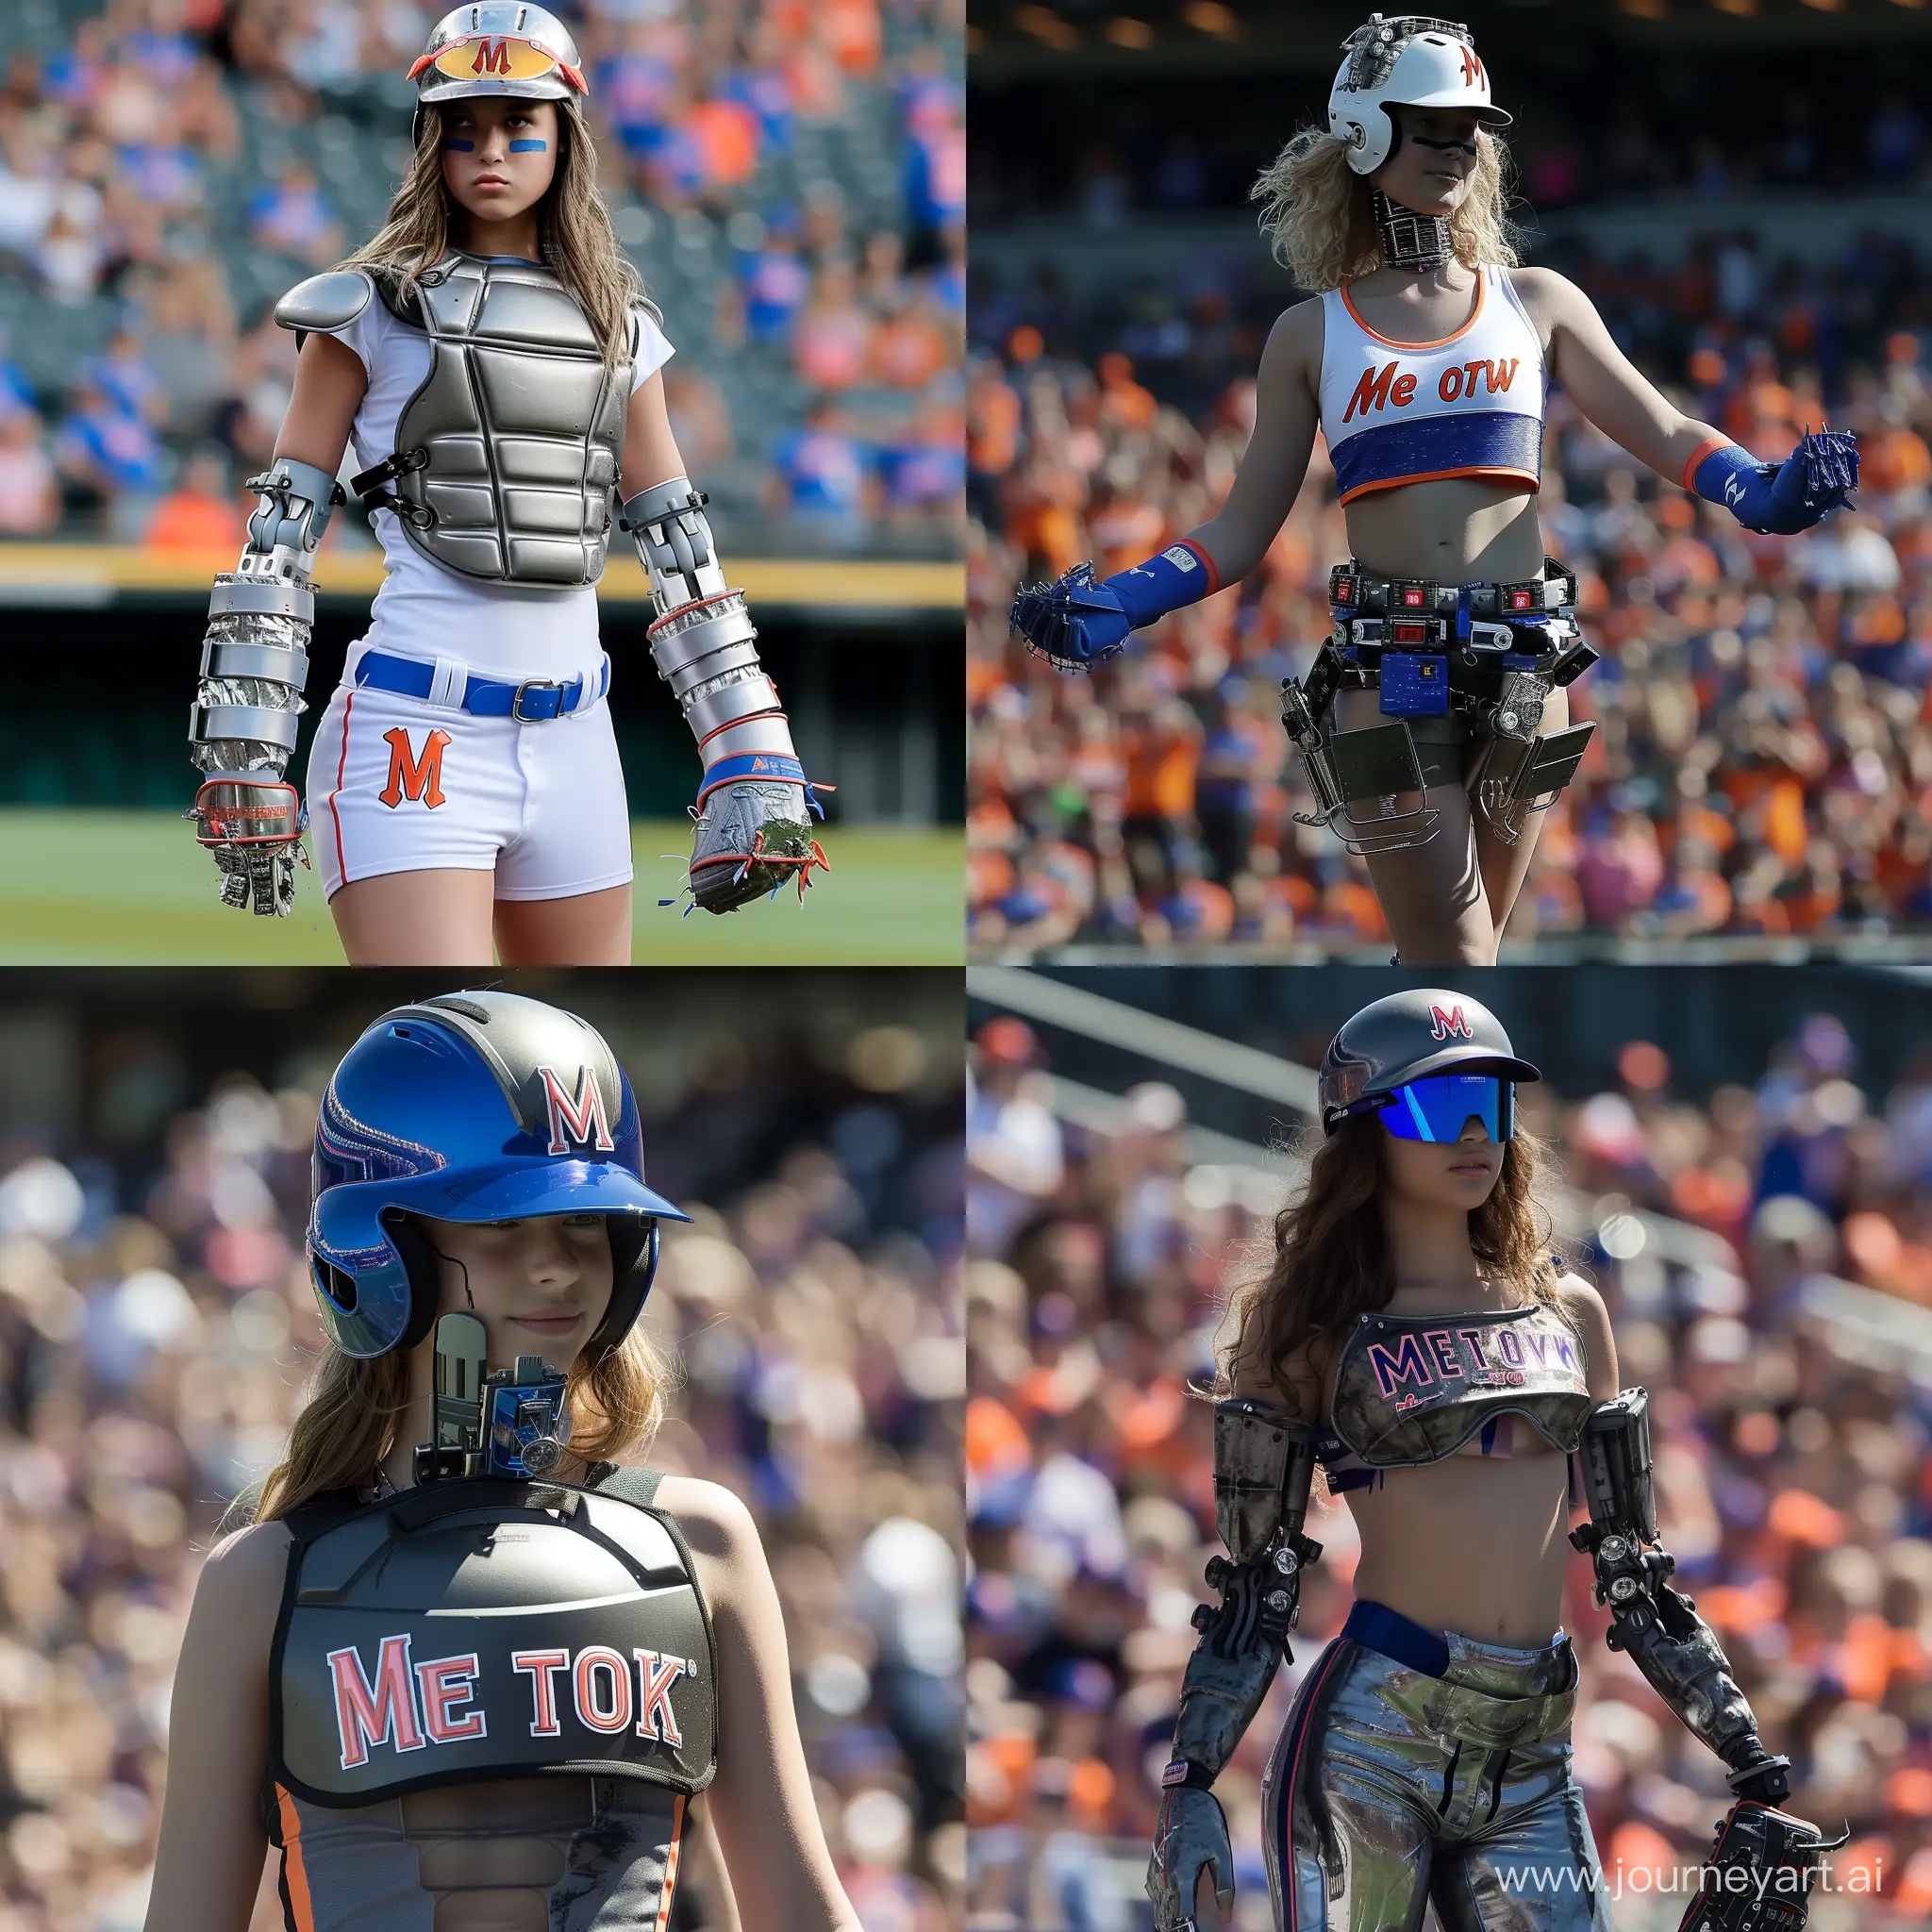 Malfunctioning-Robot-Cheerleader-at-New-York-Mets-Event